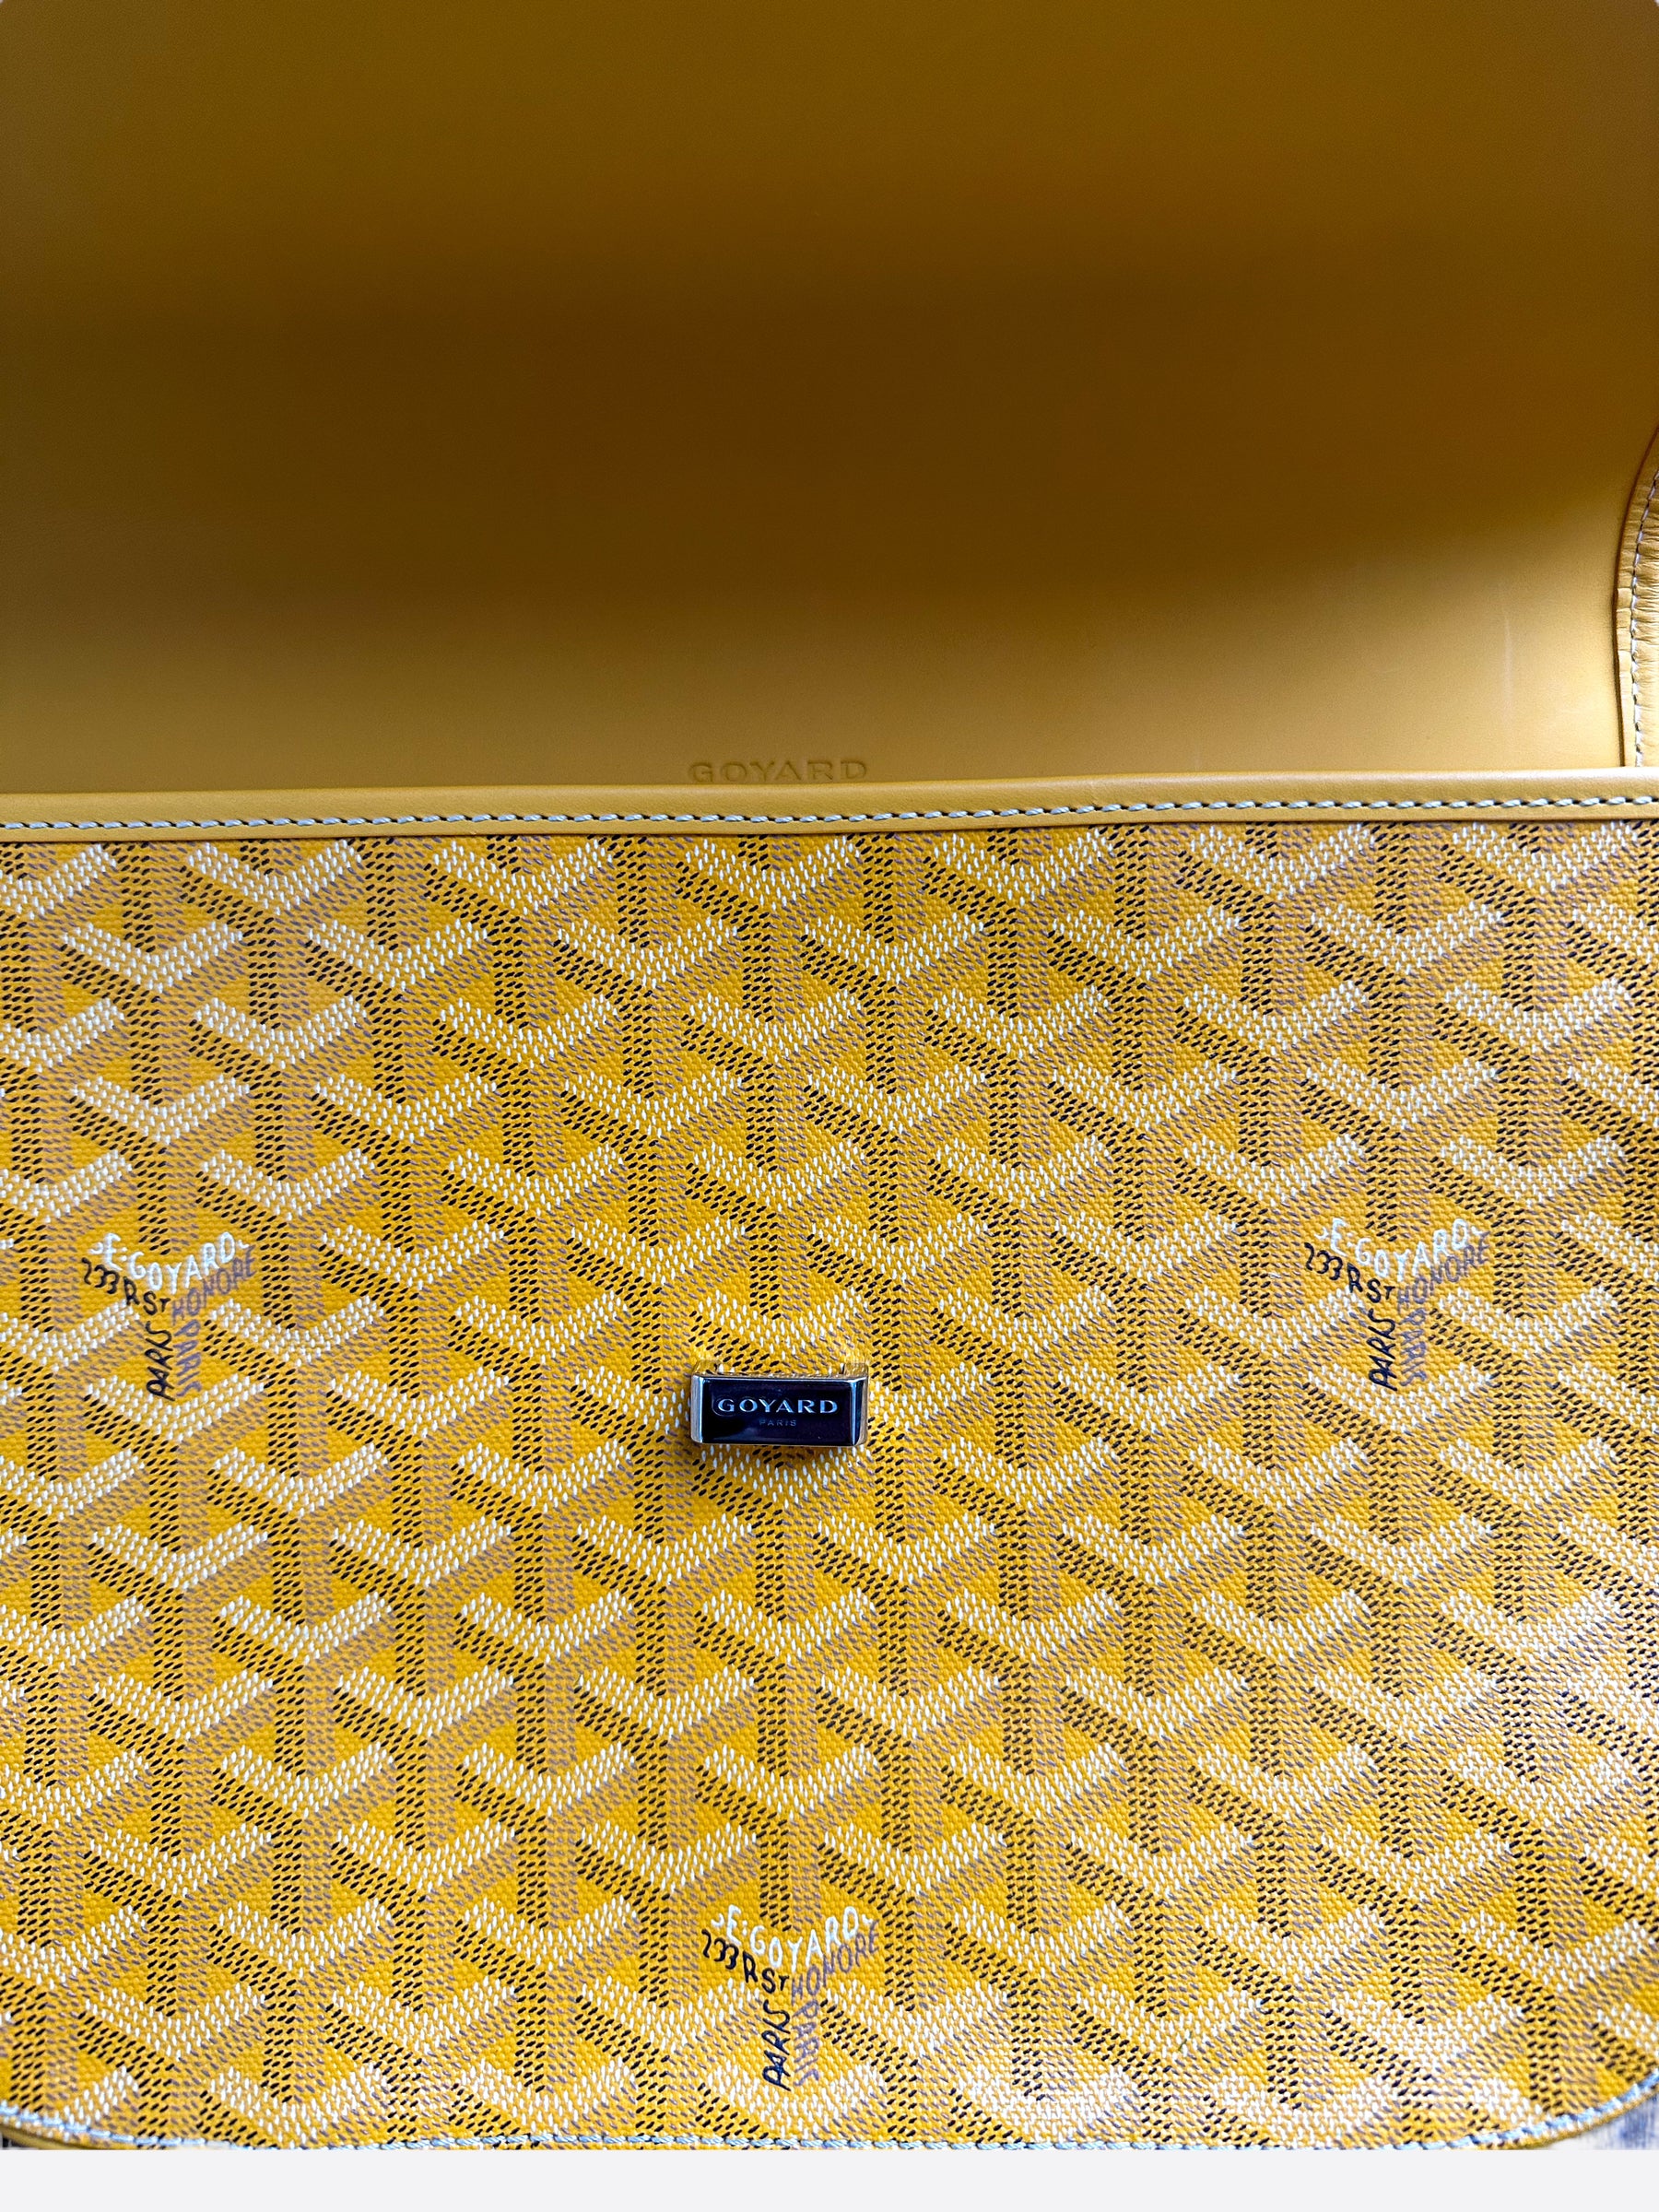 Goyard Yellow Belvedere Messenger Bag